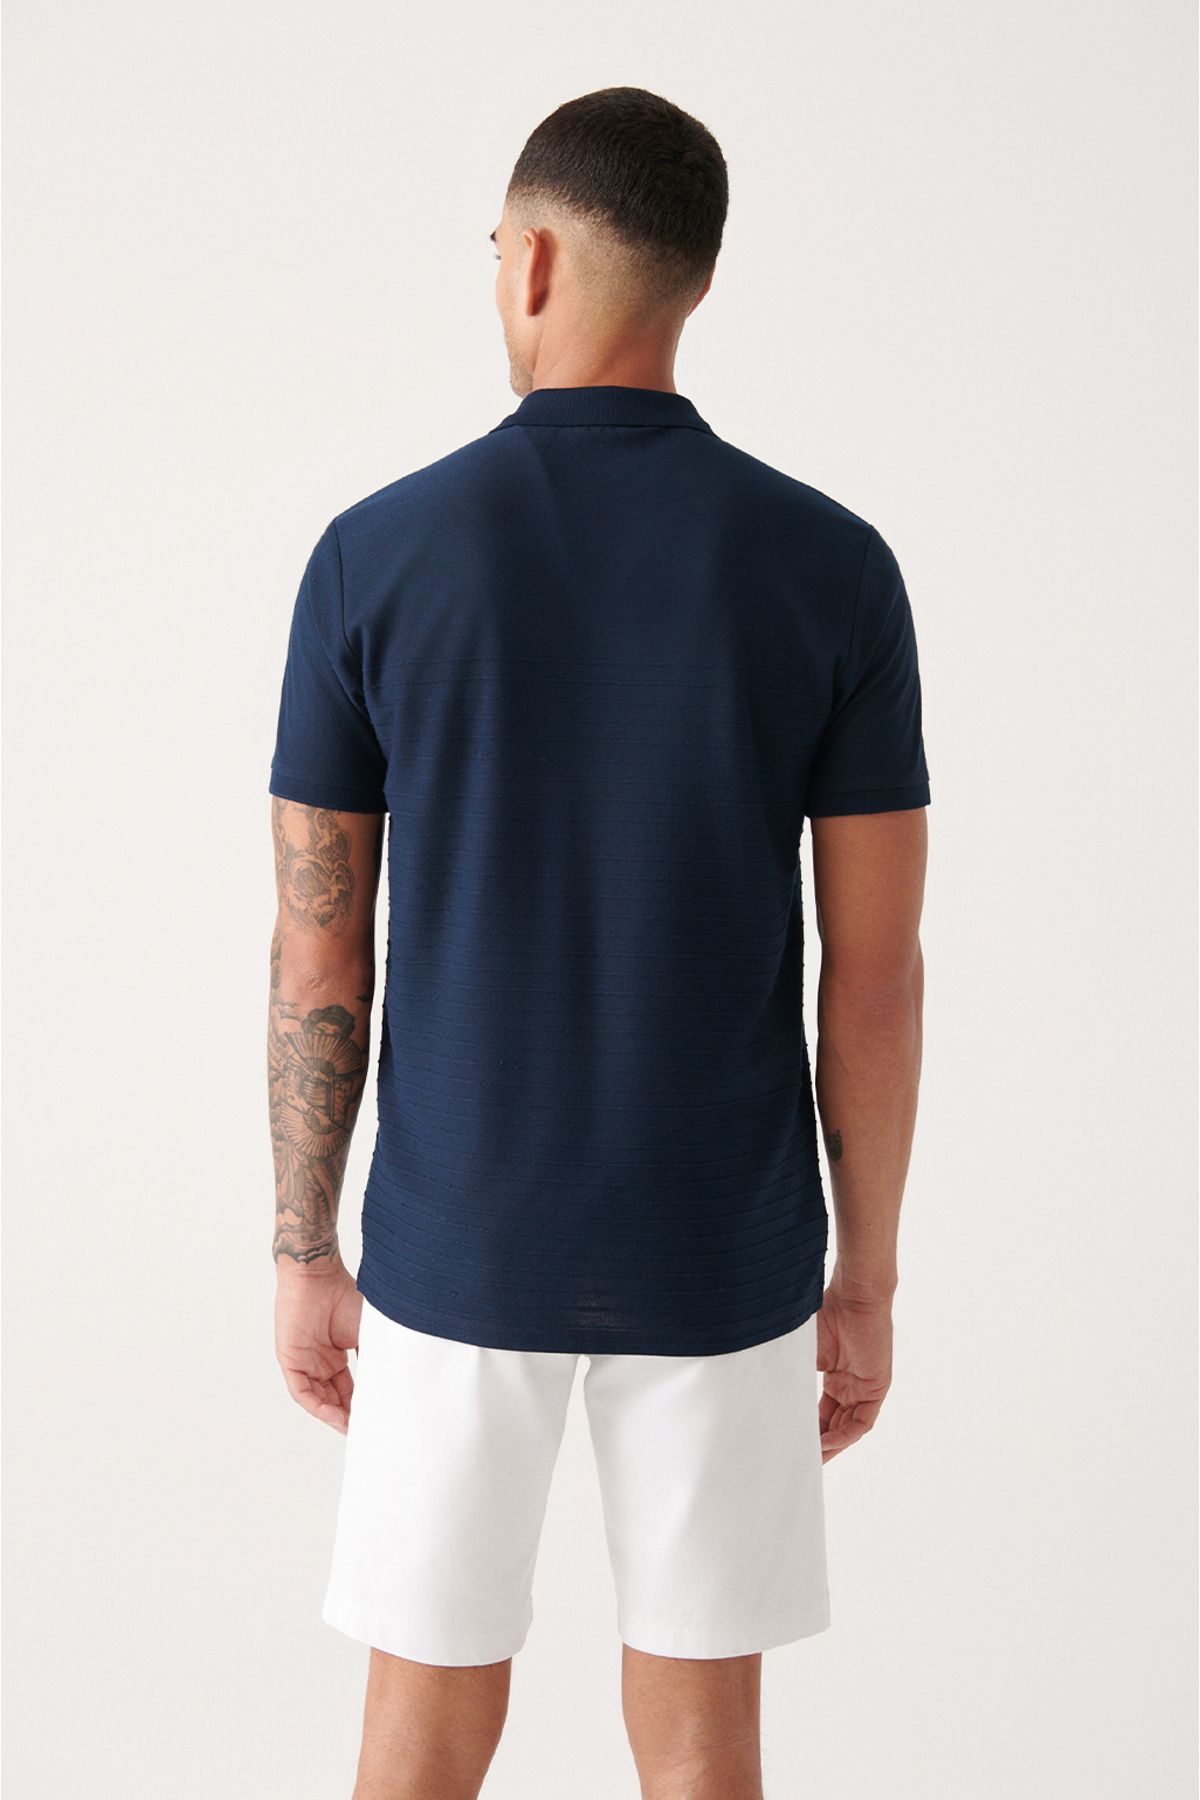 Avva آبی دریایی مردان 100 ٪ پنبه ژاکواری پولو یاکا تی شرت مناسب A31Y1128